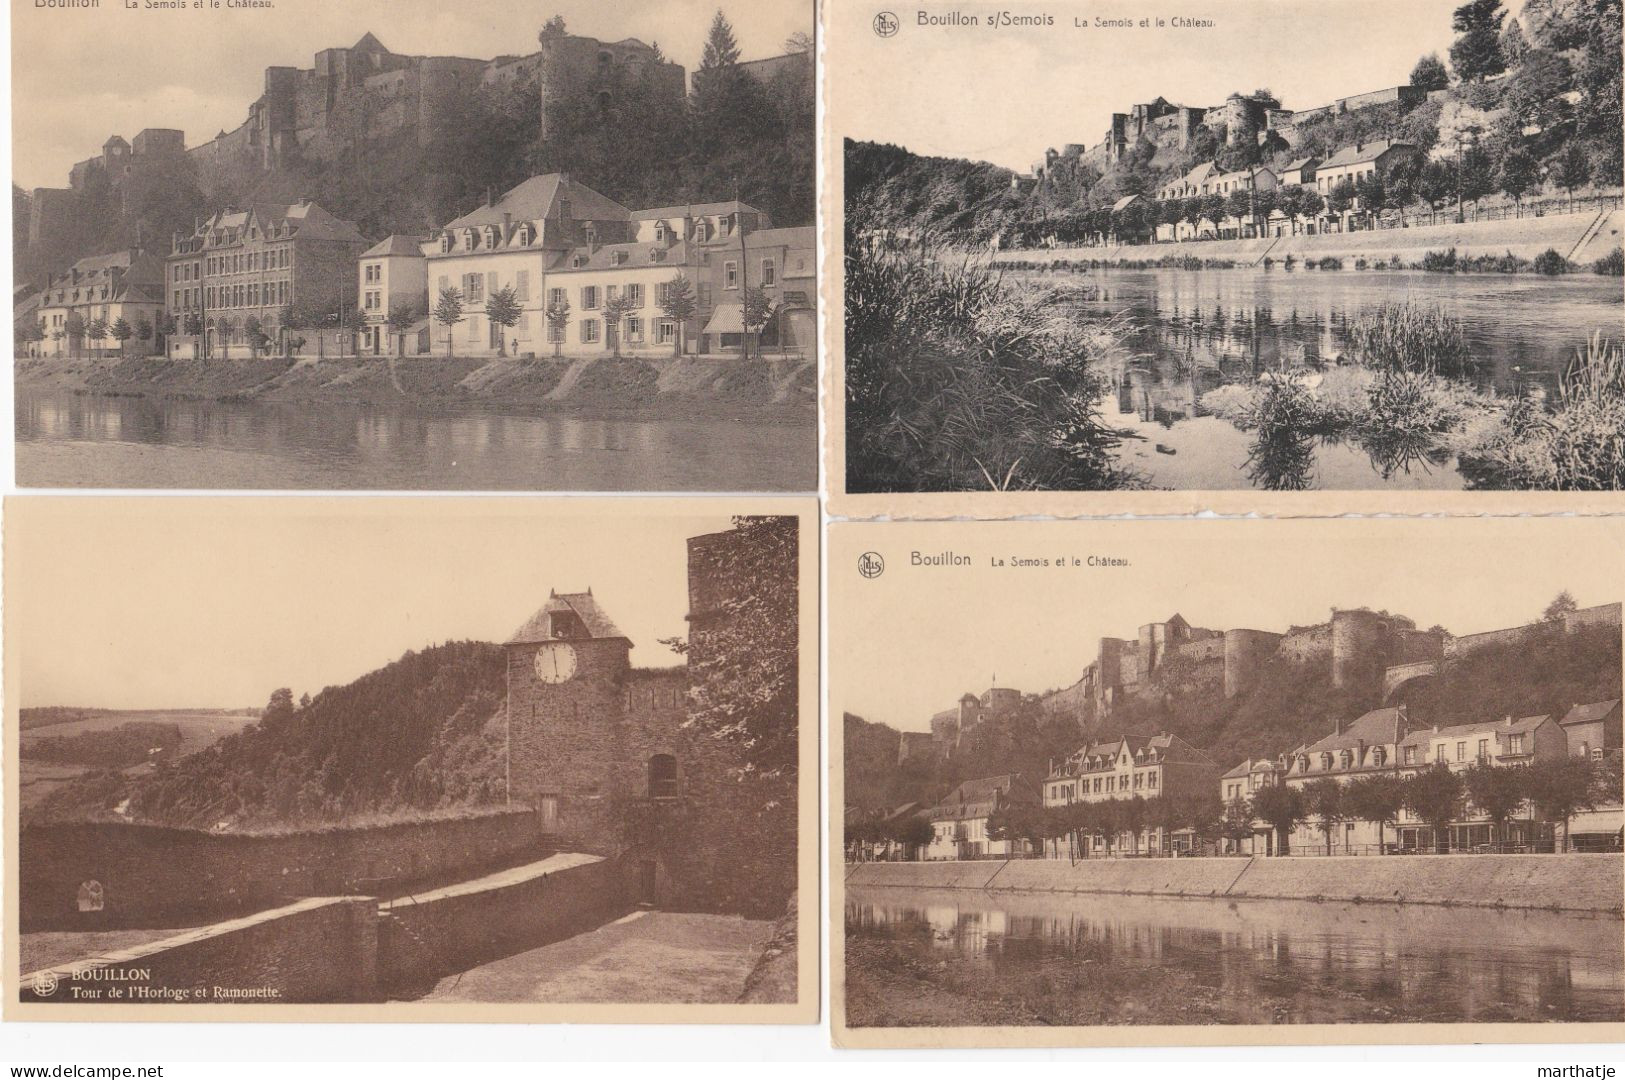 39 Cartes Postales De Bouillon - Province Luxemburg - Belgique - Colecciones Y Lotes